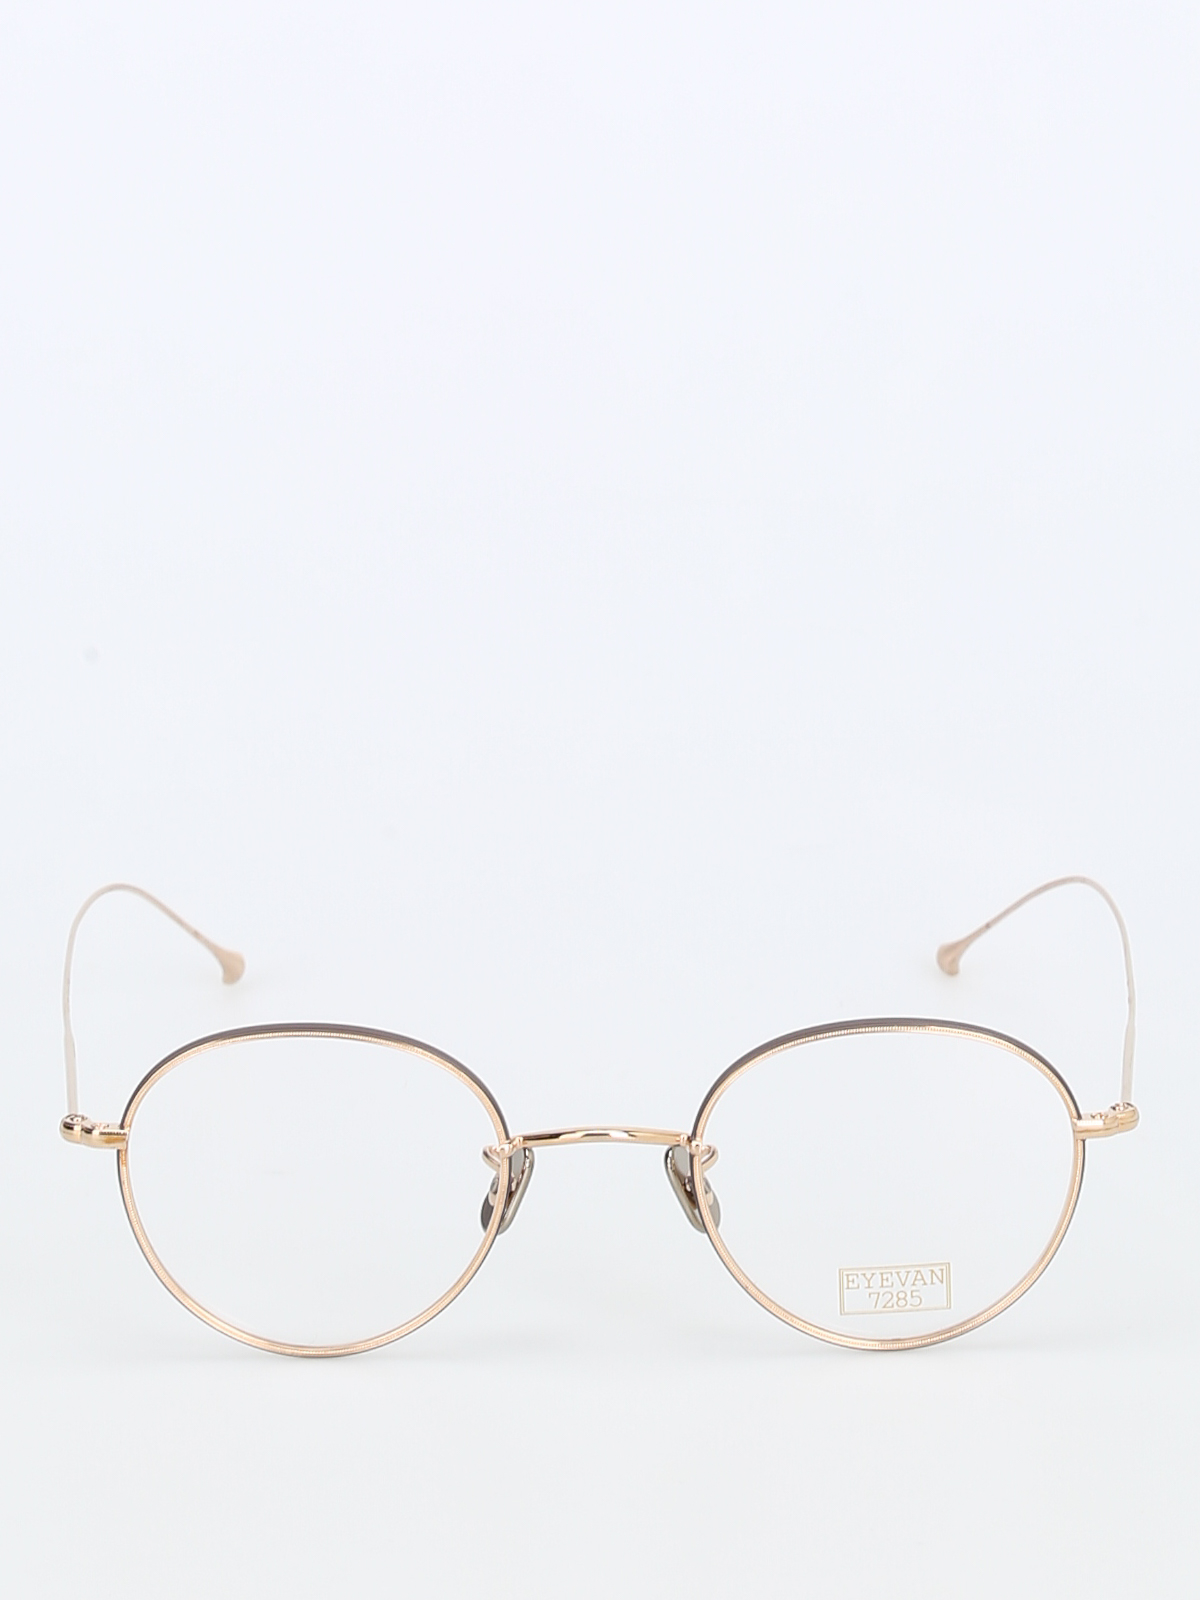 Glasses Eyevan7285 Rose Gold Round Frame Eyeglasses Ev1529080